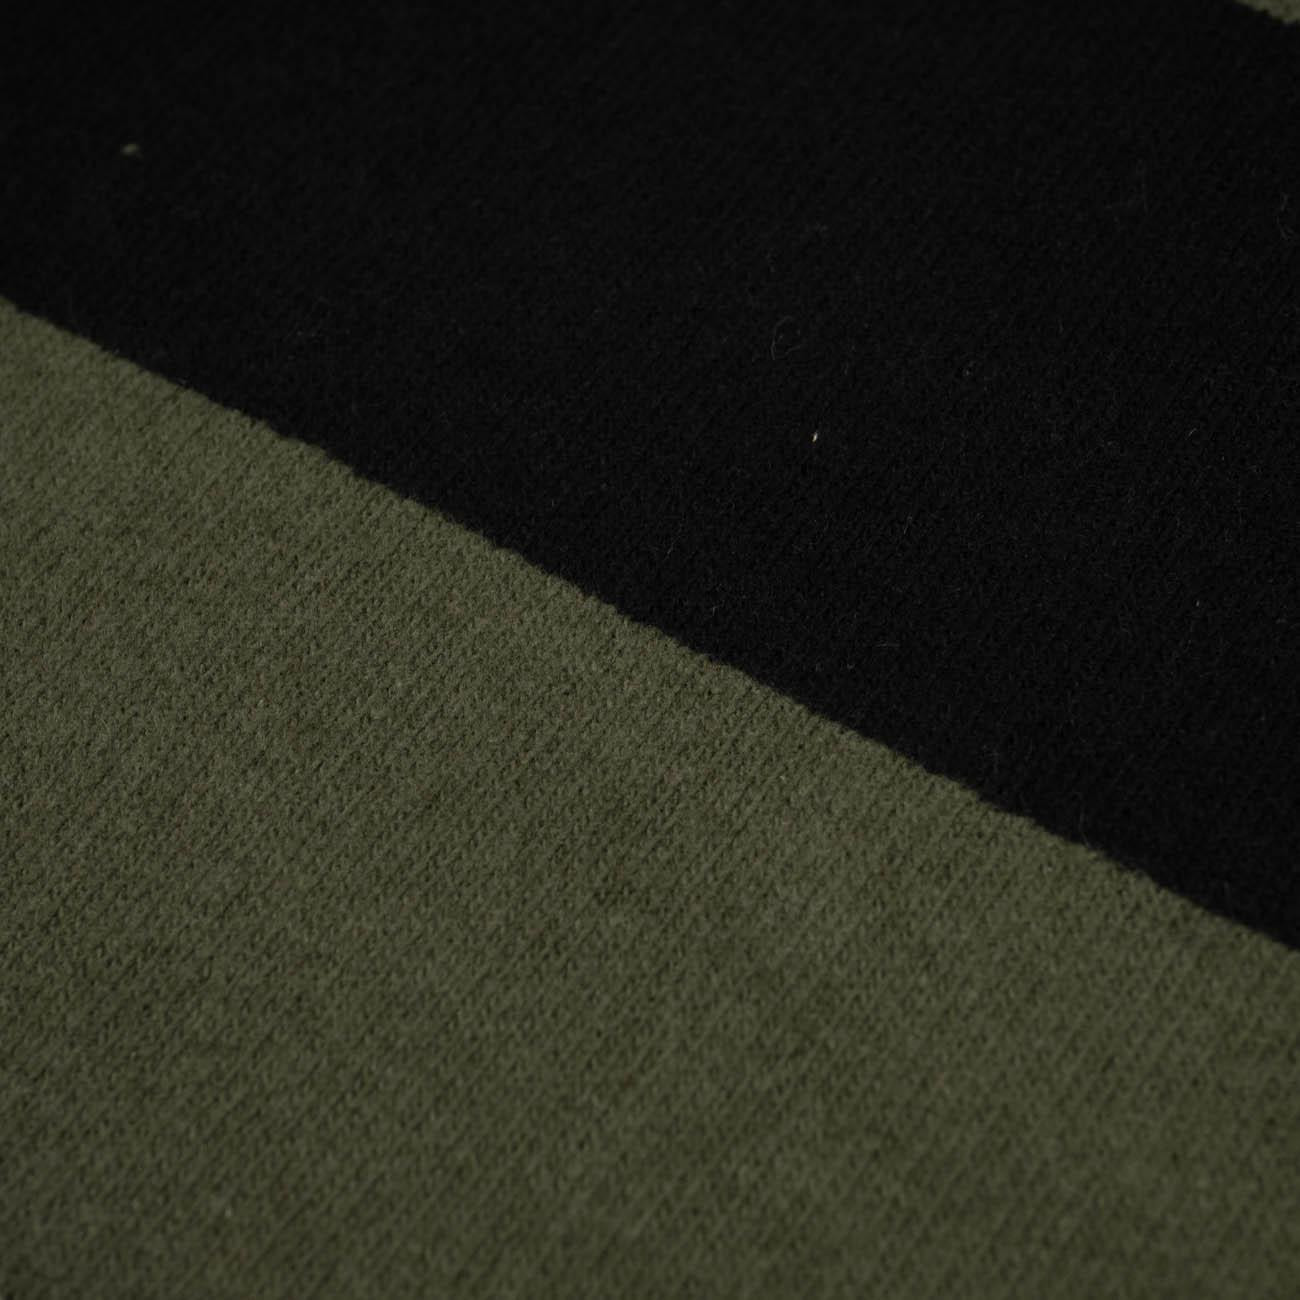 STRIPES OLIVE - BLACK - Emery sweater knit. 270g